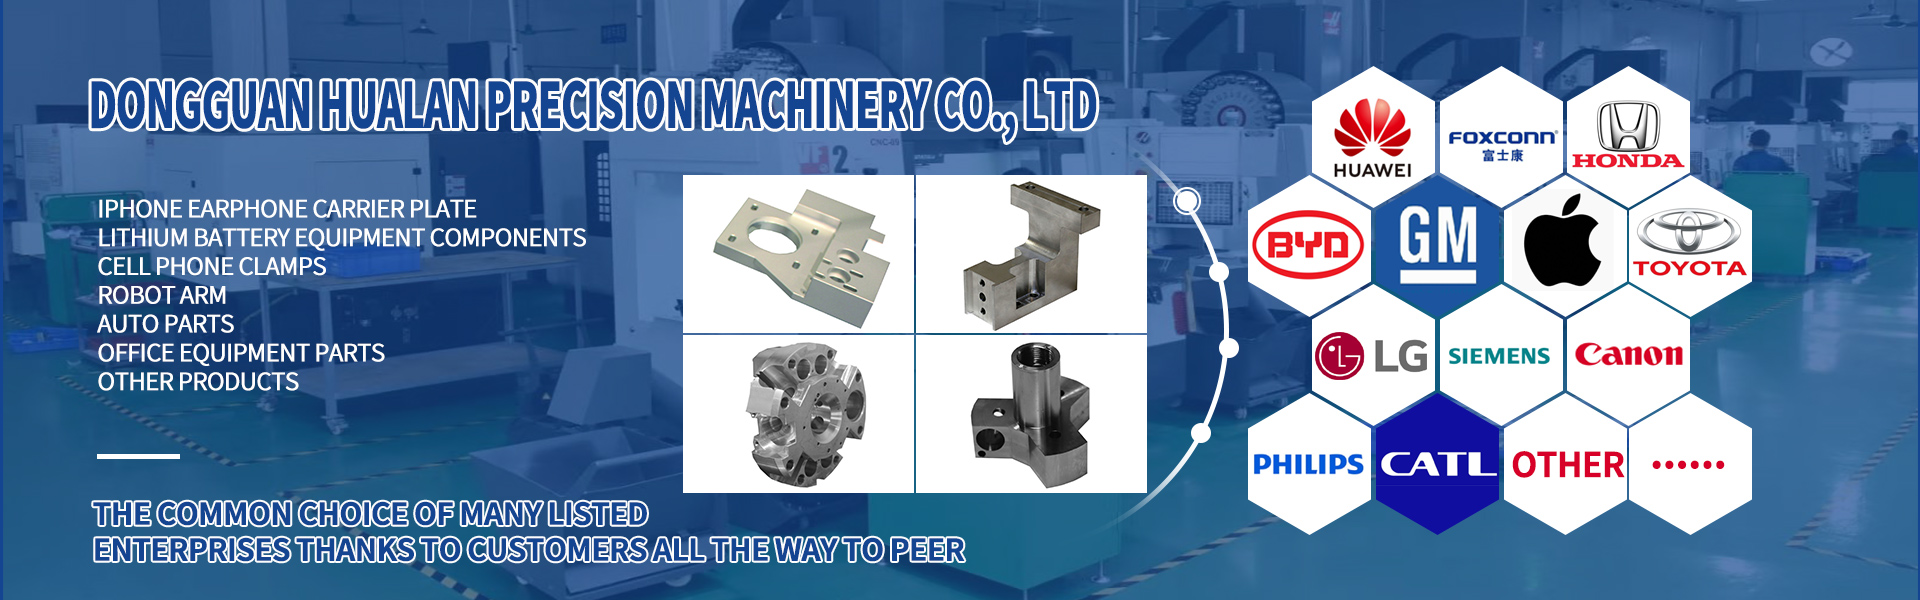 CNC εξαρτήματα κατεργασίας, Turing και άλεση, κοπή γραμμών,Dongguan Hualan Precision Machinery Co., LTD